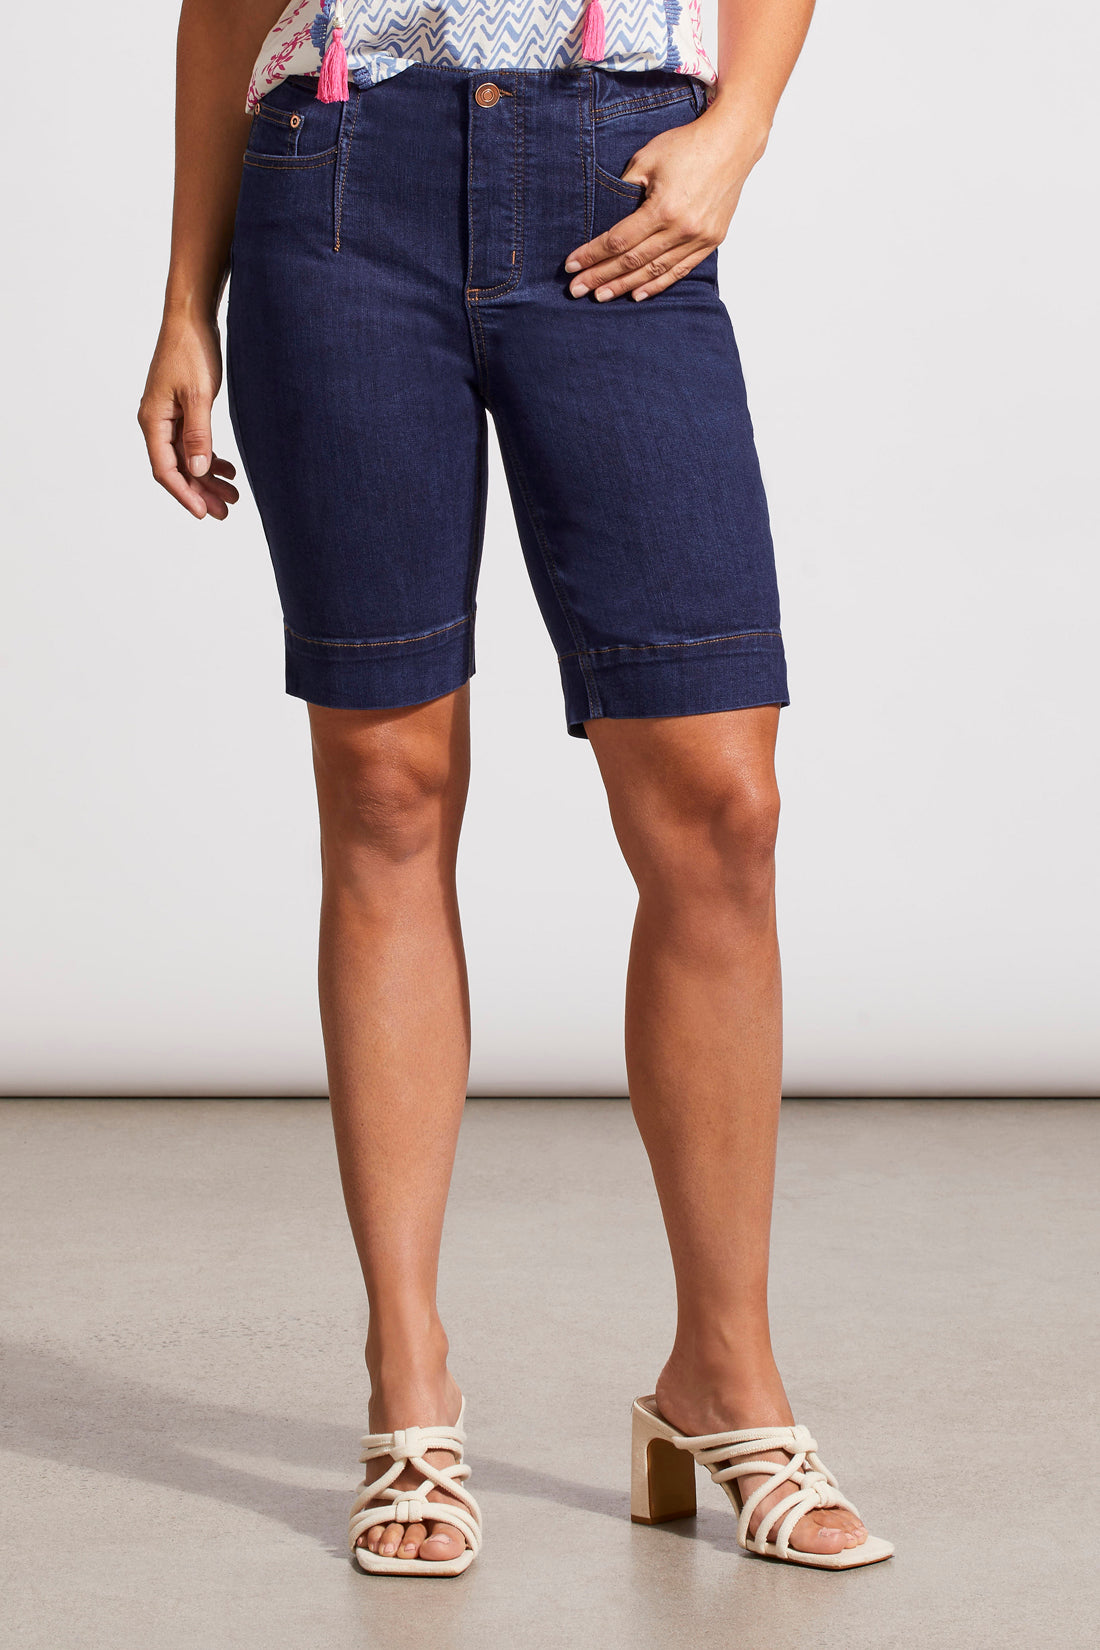 Tribal Audrey Pull On Bermuda Jean Shorts Rinse 53590-2020-2200